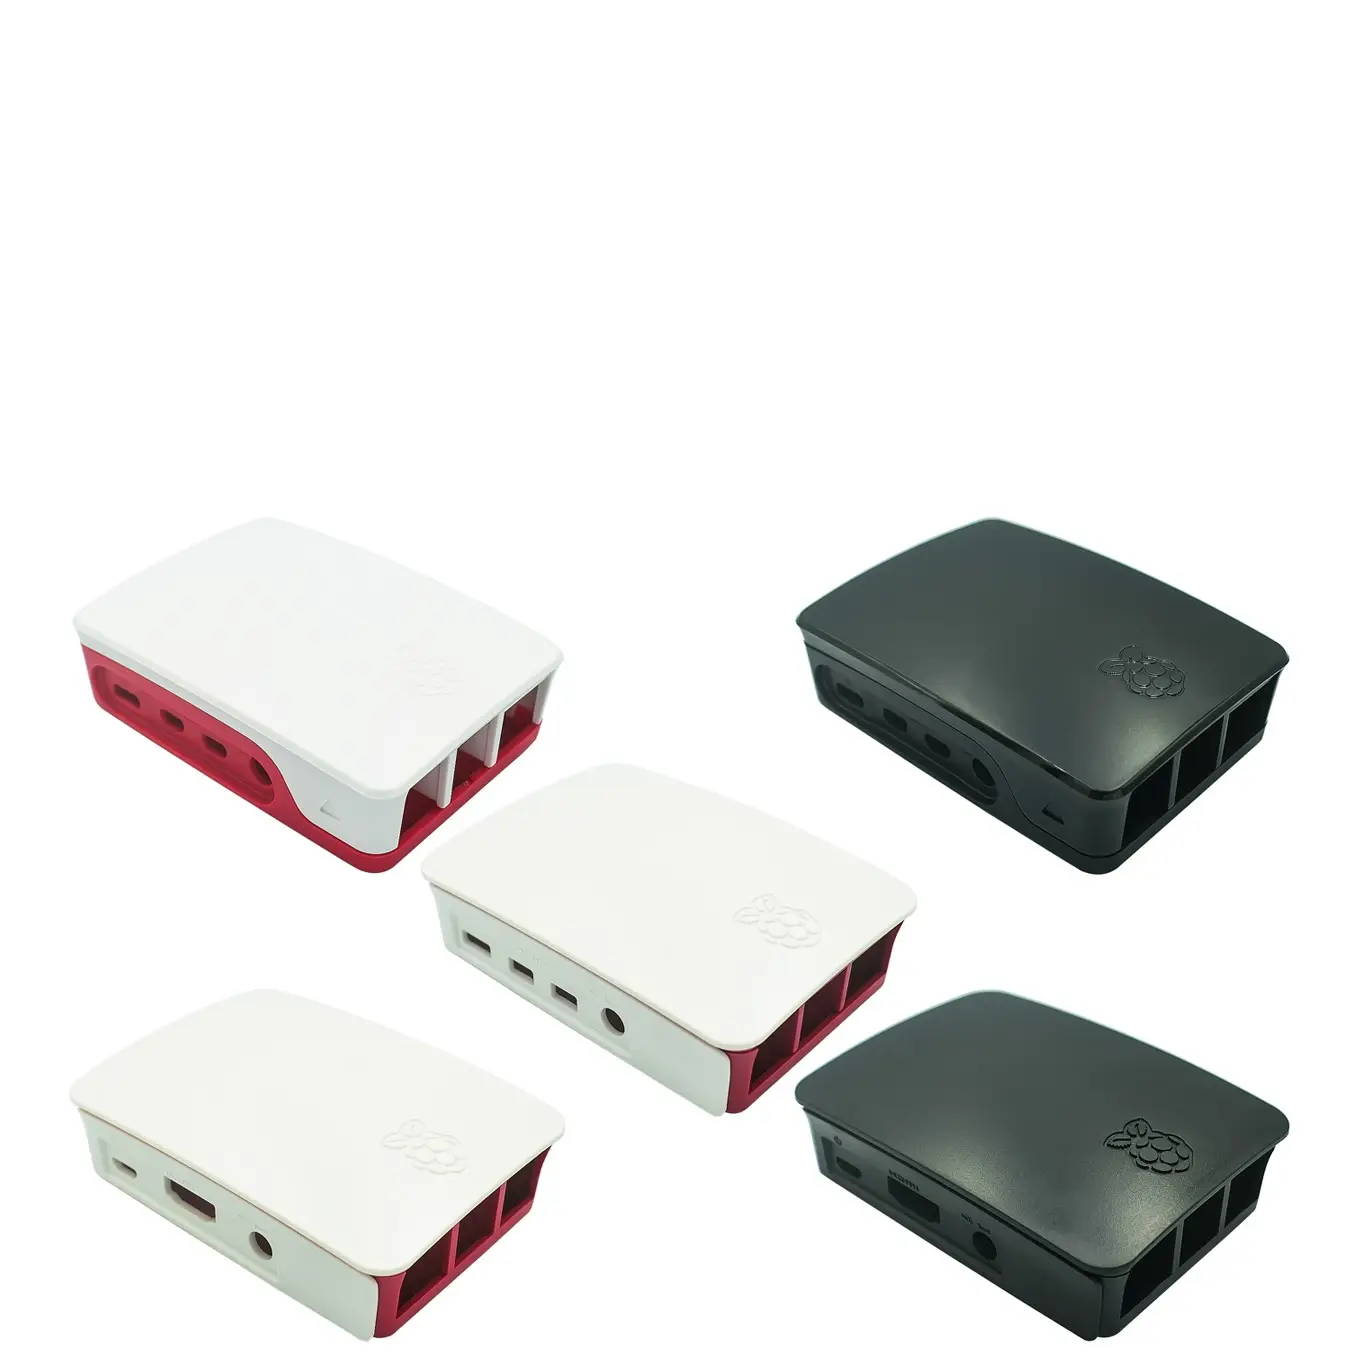 Hot Sale Raspberry Pi 4 Model B ABS Case Plastic Box White Shell Classic Design with Fan with Heatsink for Raspberry Pi 4